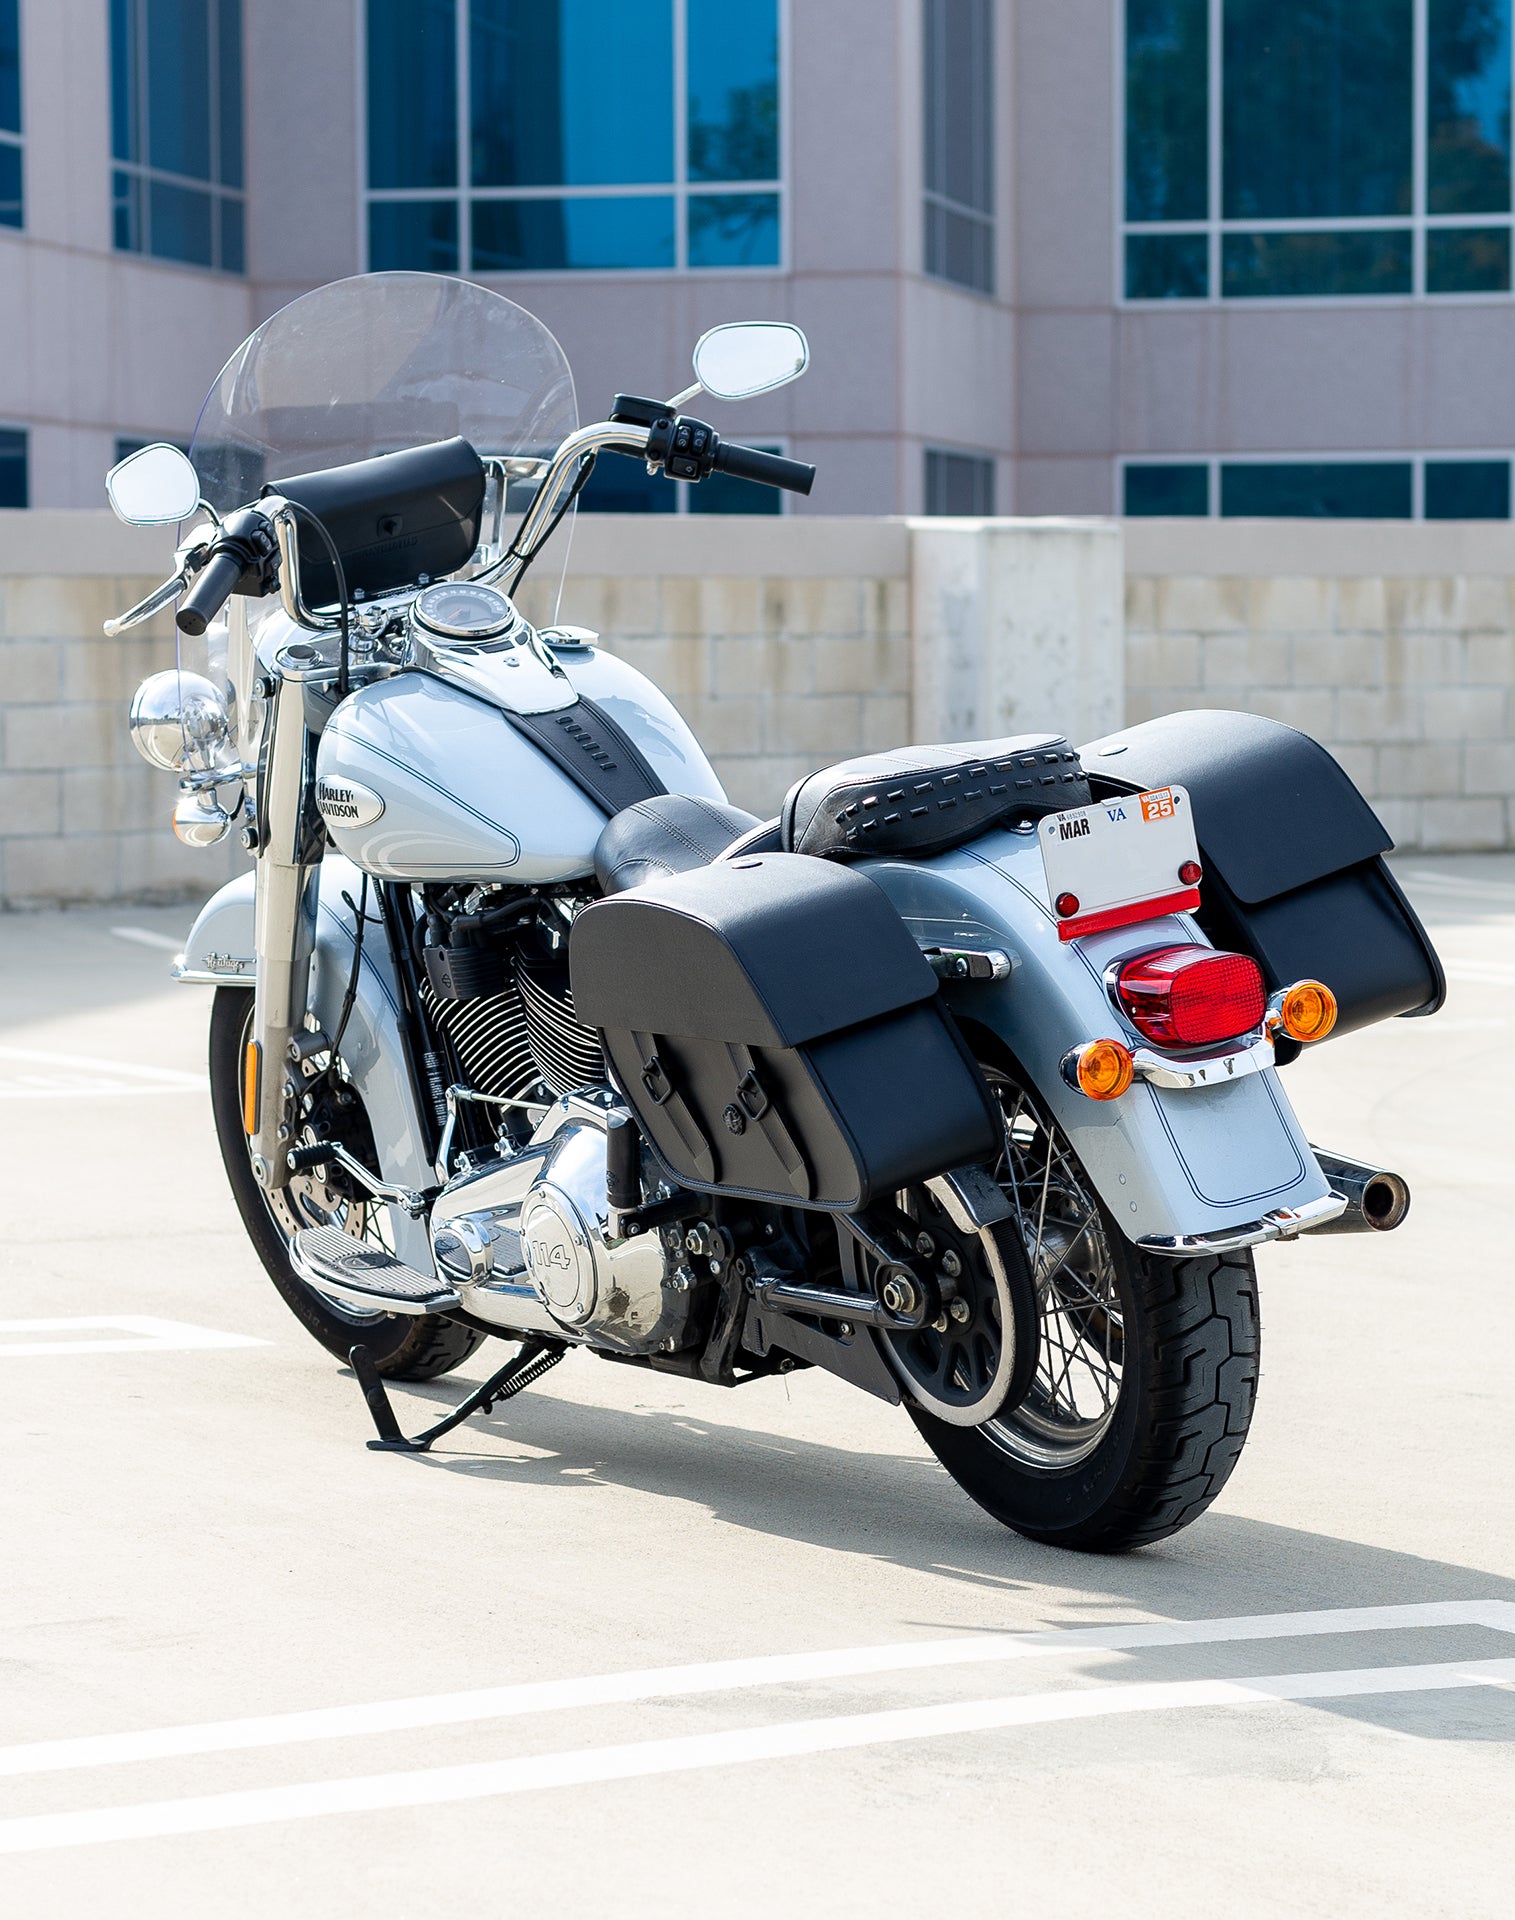 Viking Baelor Medium Leather Motorcycle Saddlebags For Harley Davidson Softail Heritage Flst I C Ci are Durable